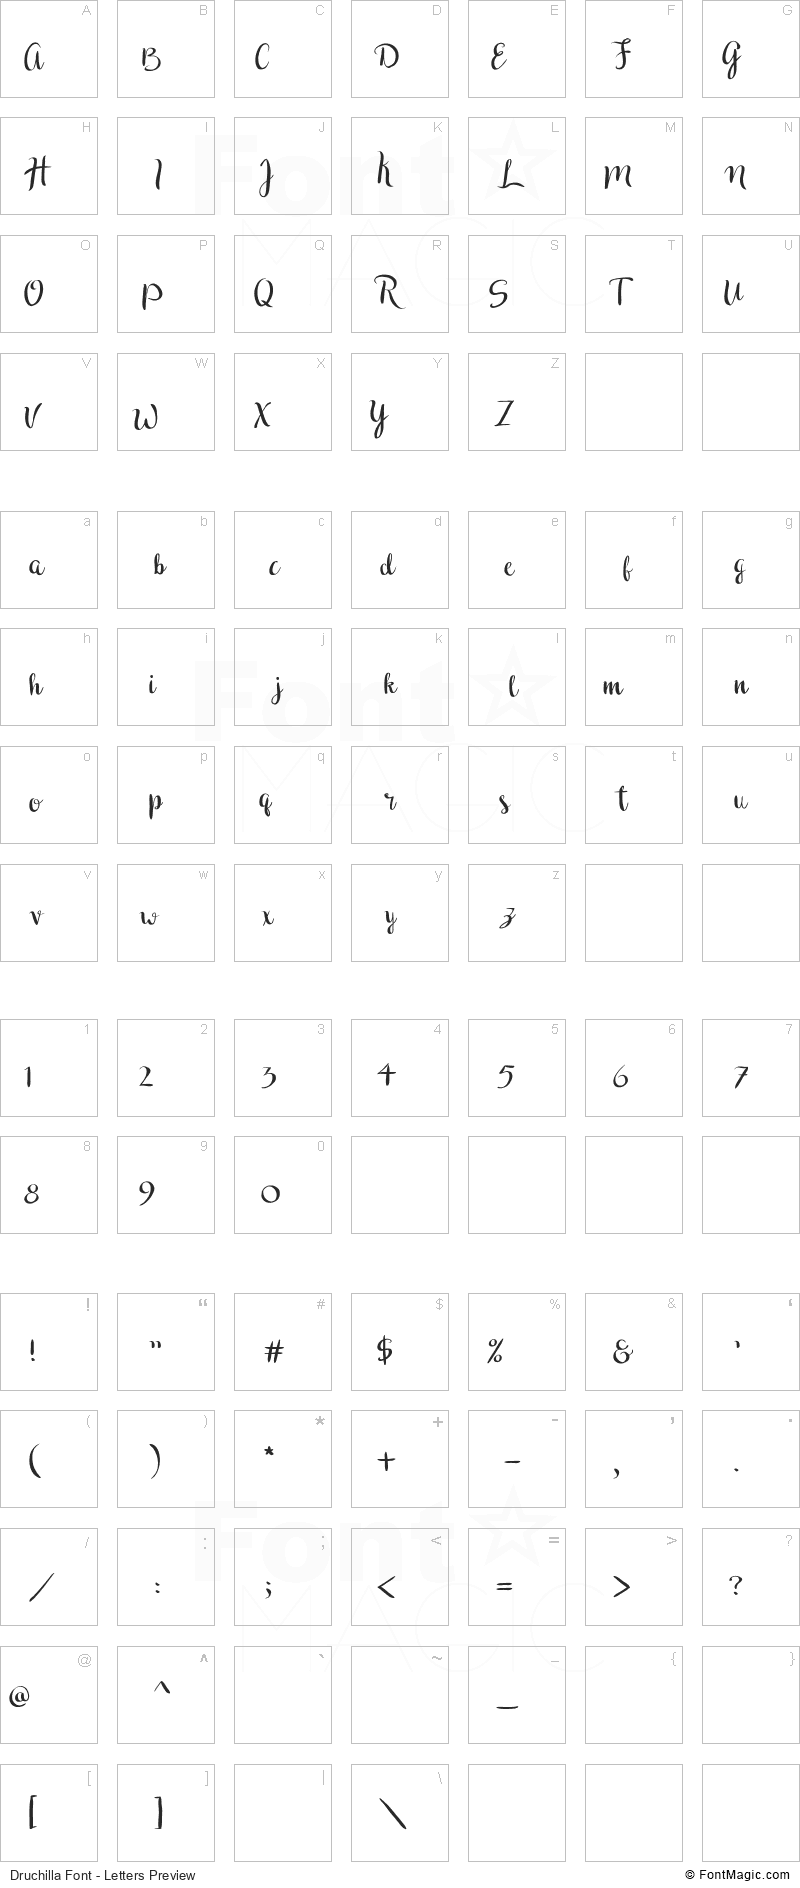 Druchilla Font - All Latters Preview Chart